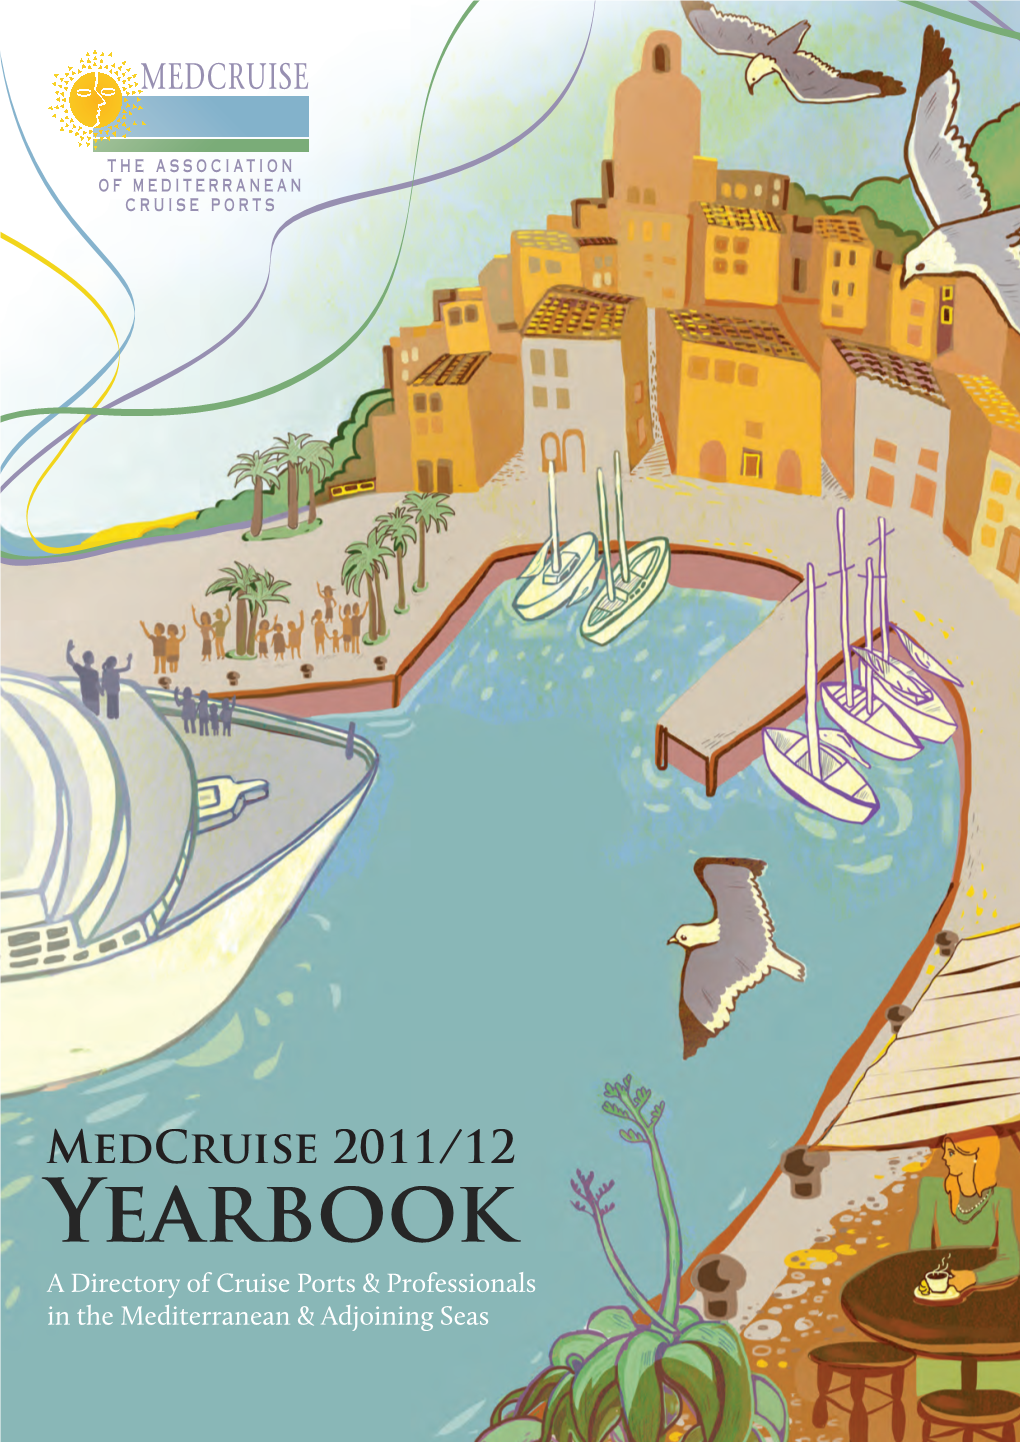 Medcruise 2011/12 Yearbook